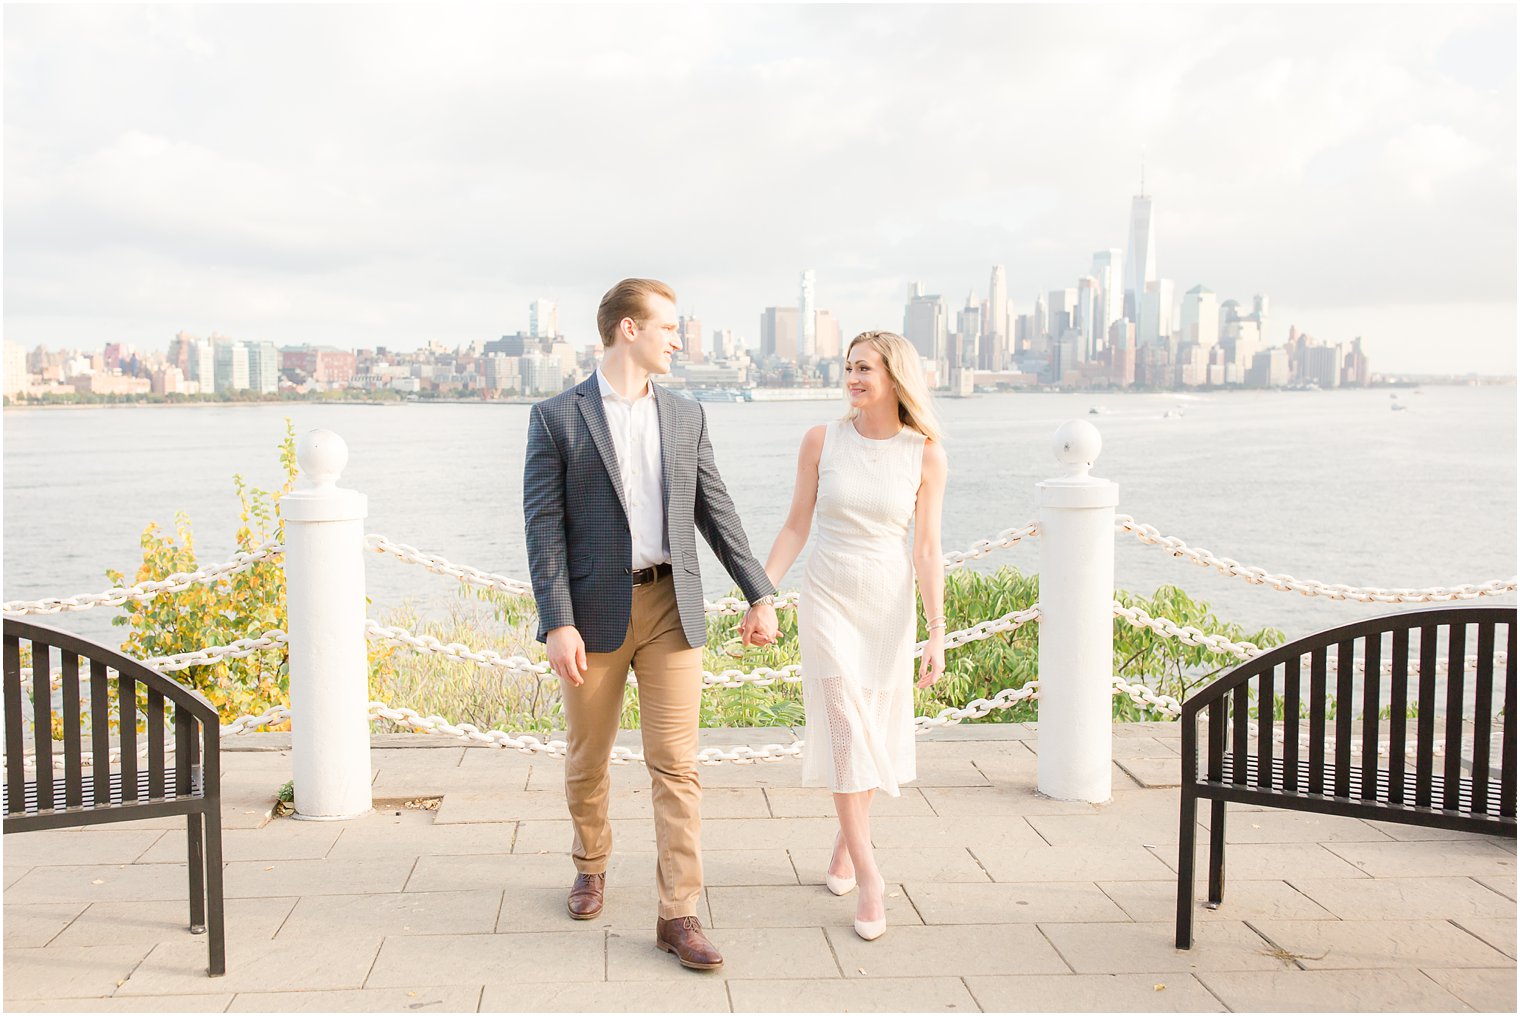 Engagement session at Stevens Institute by Hoboken NJ Engagement Photographer